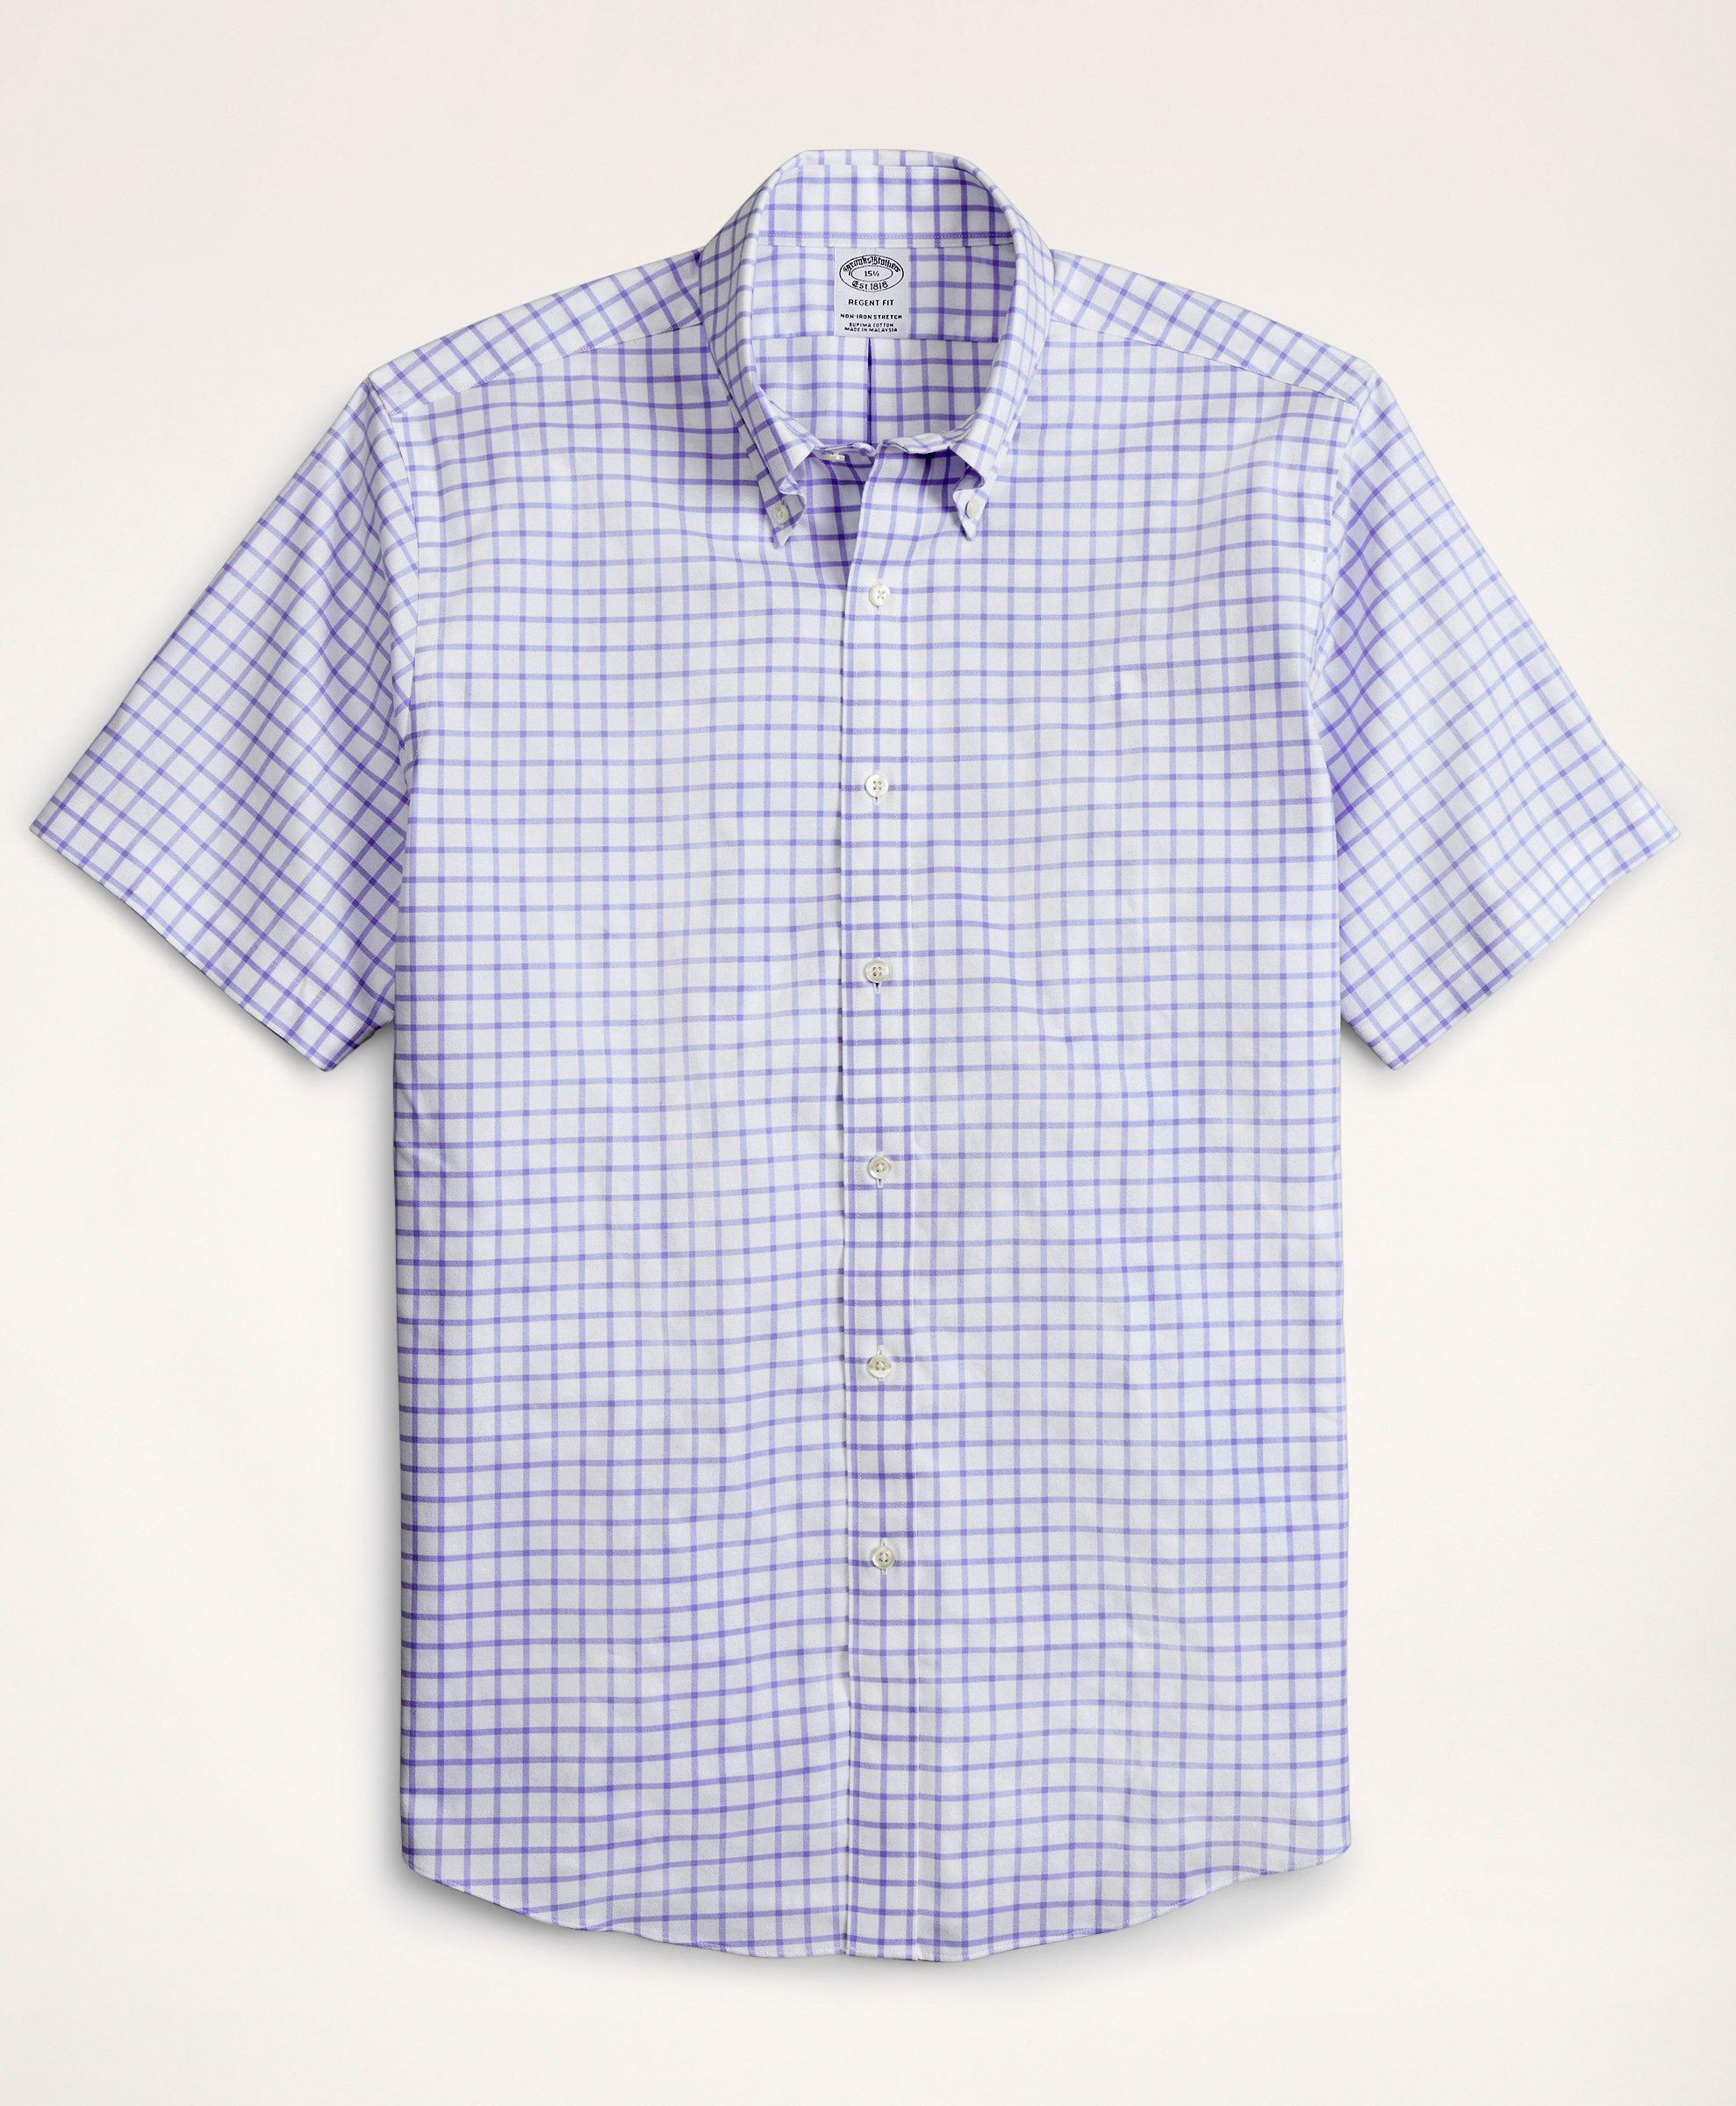 Stretch Regent Regular-Fit Dress Shirt, Non-Iron Twill Short-Sleeve Grid Check, image 1